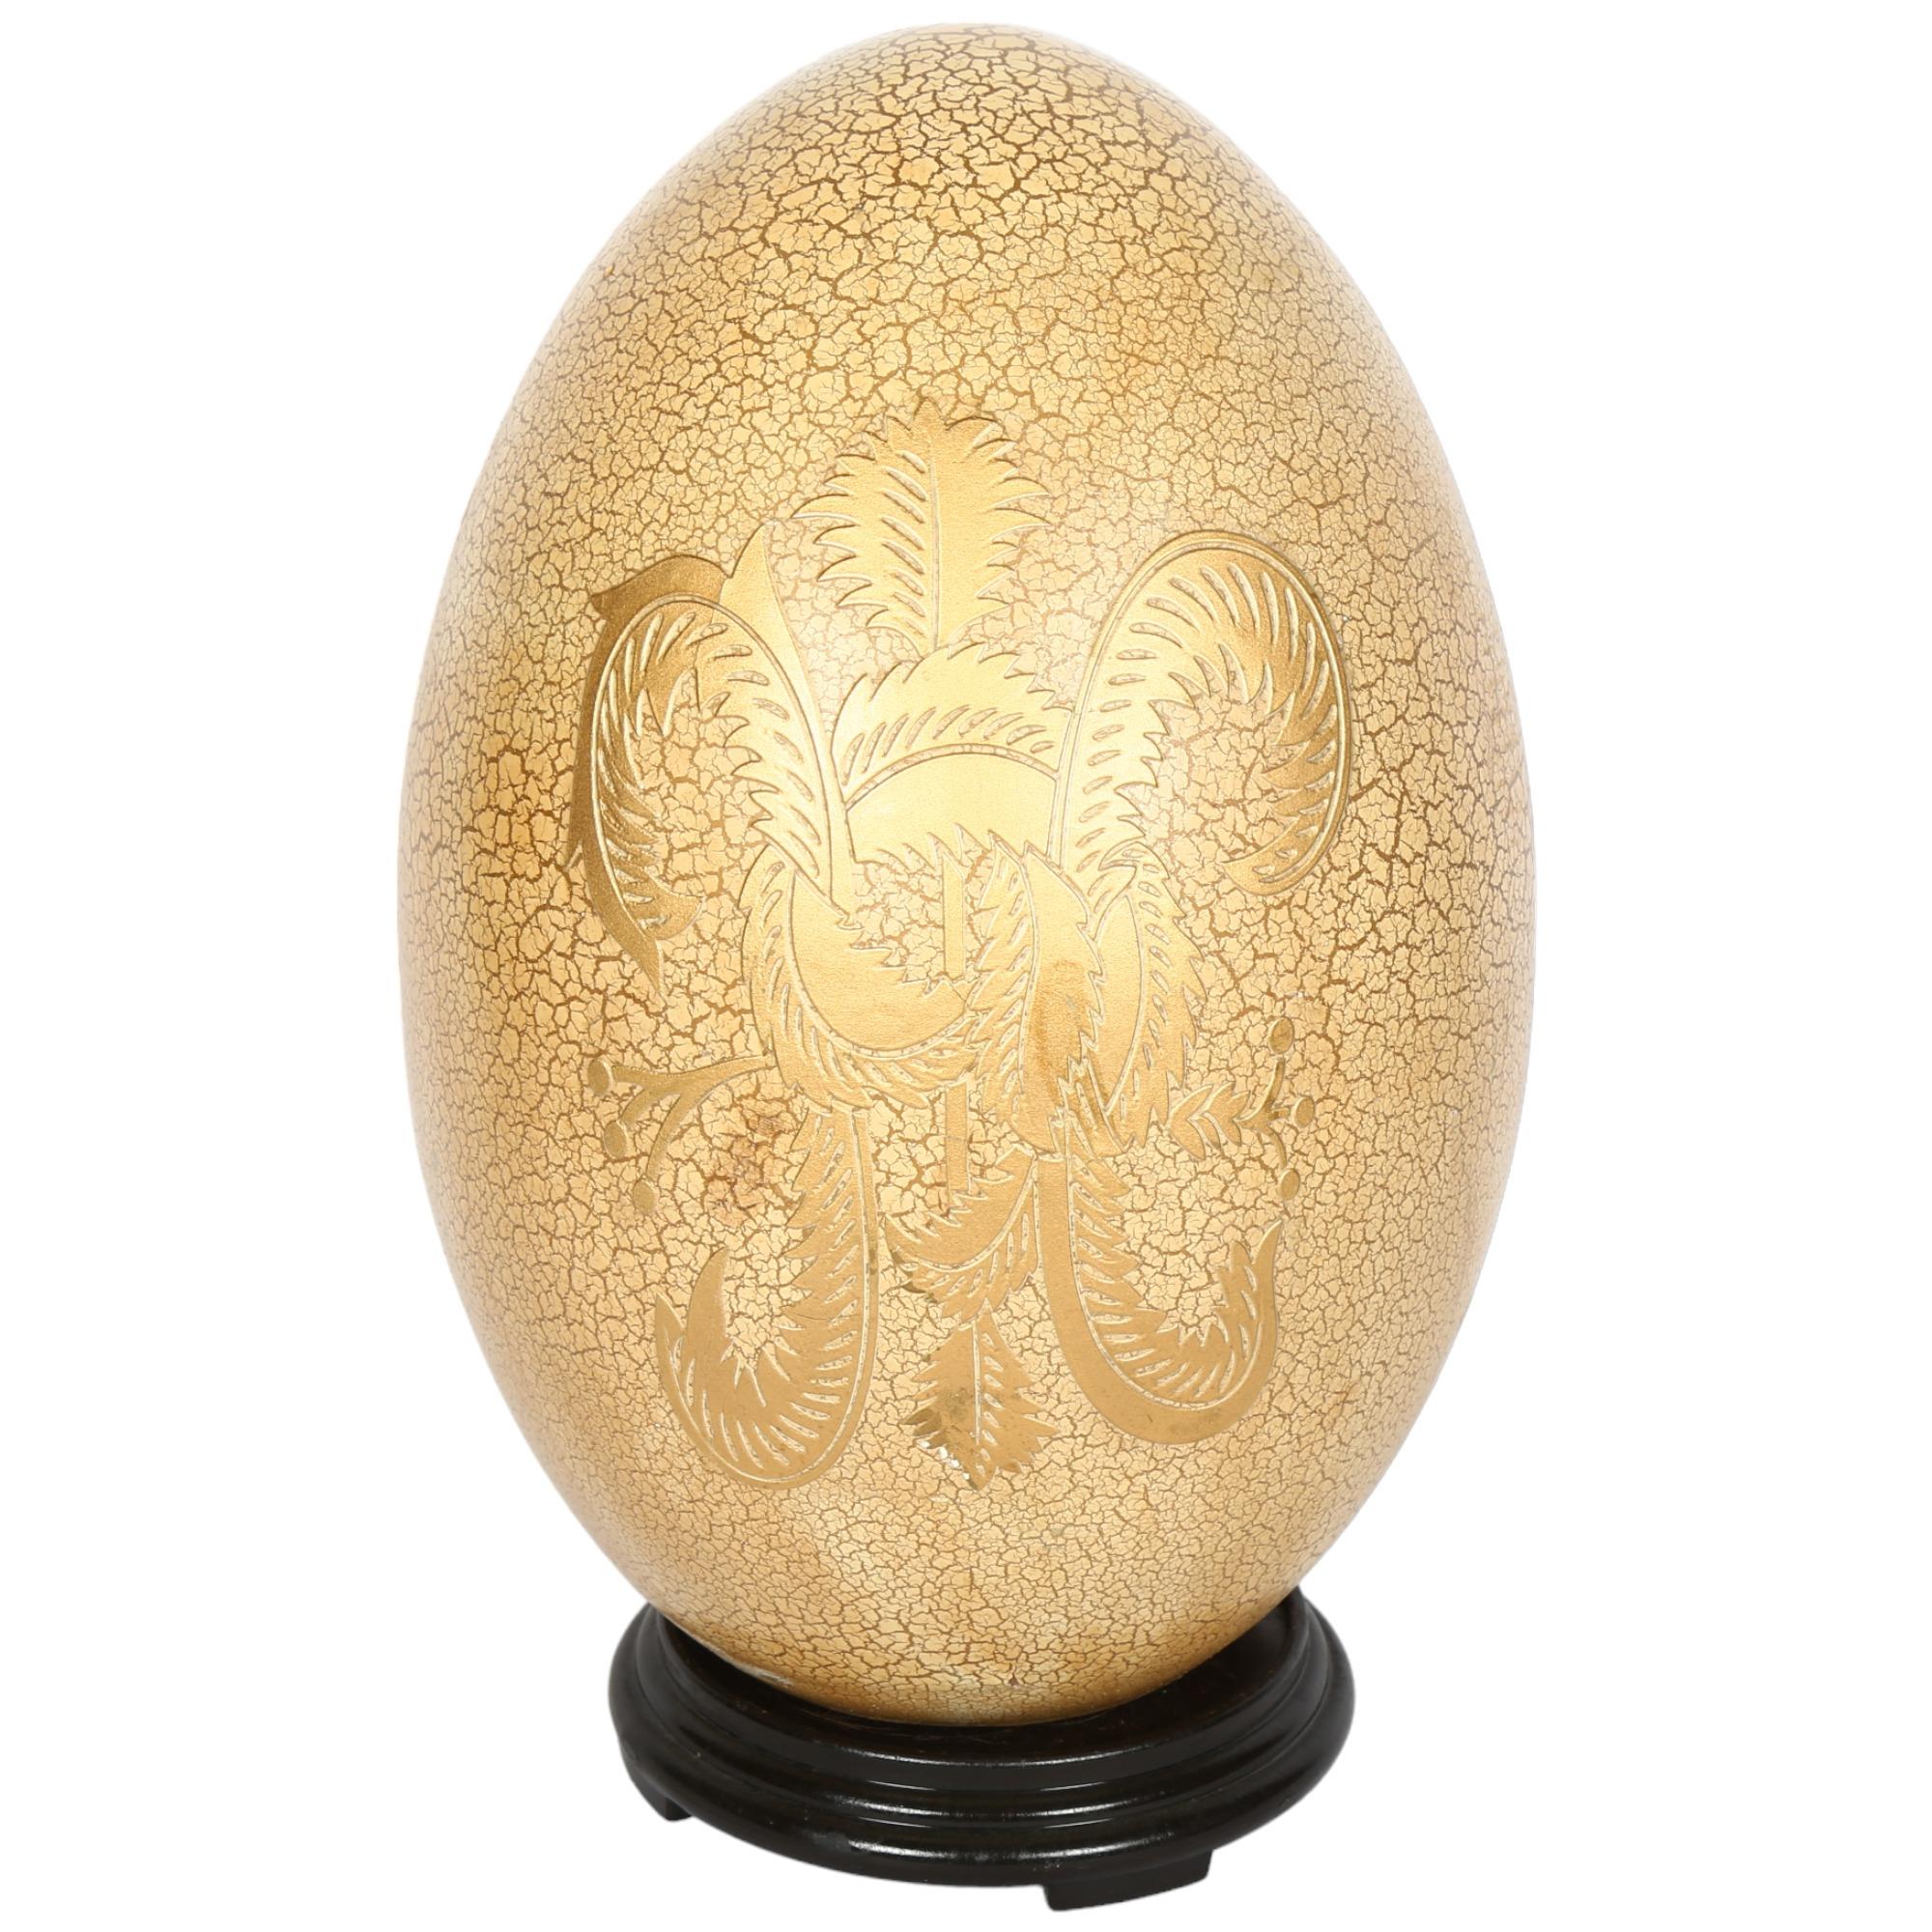 An ornamental gilded ceramic egg on stand, H36cm